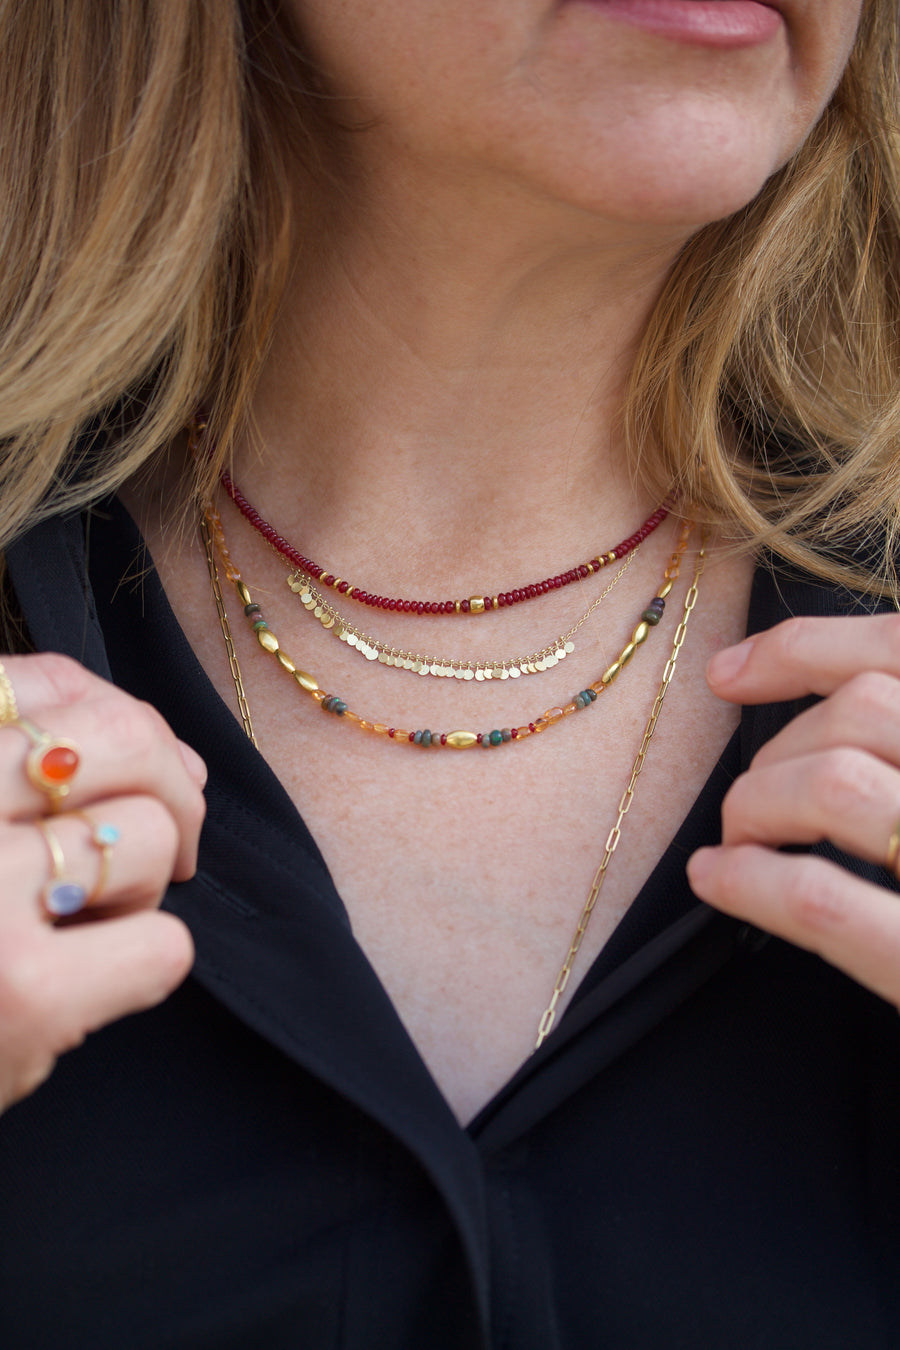 Ruby Bead & High Karat Gold Necklace